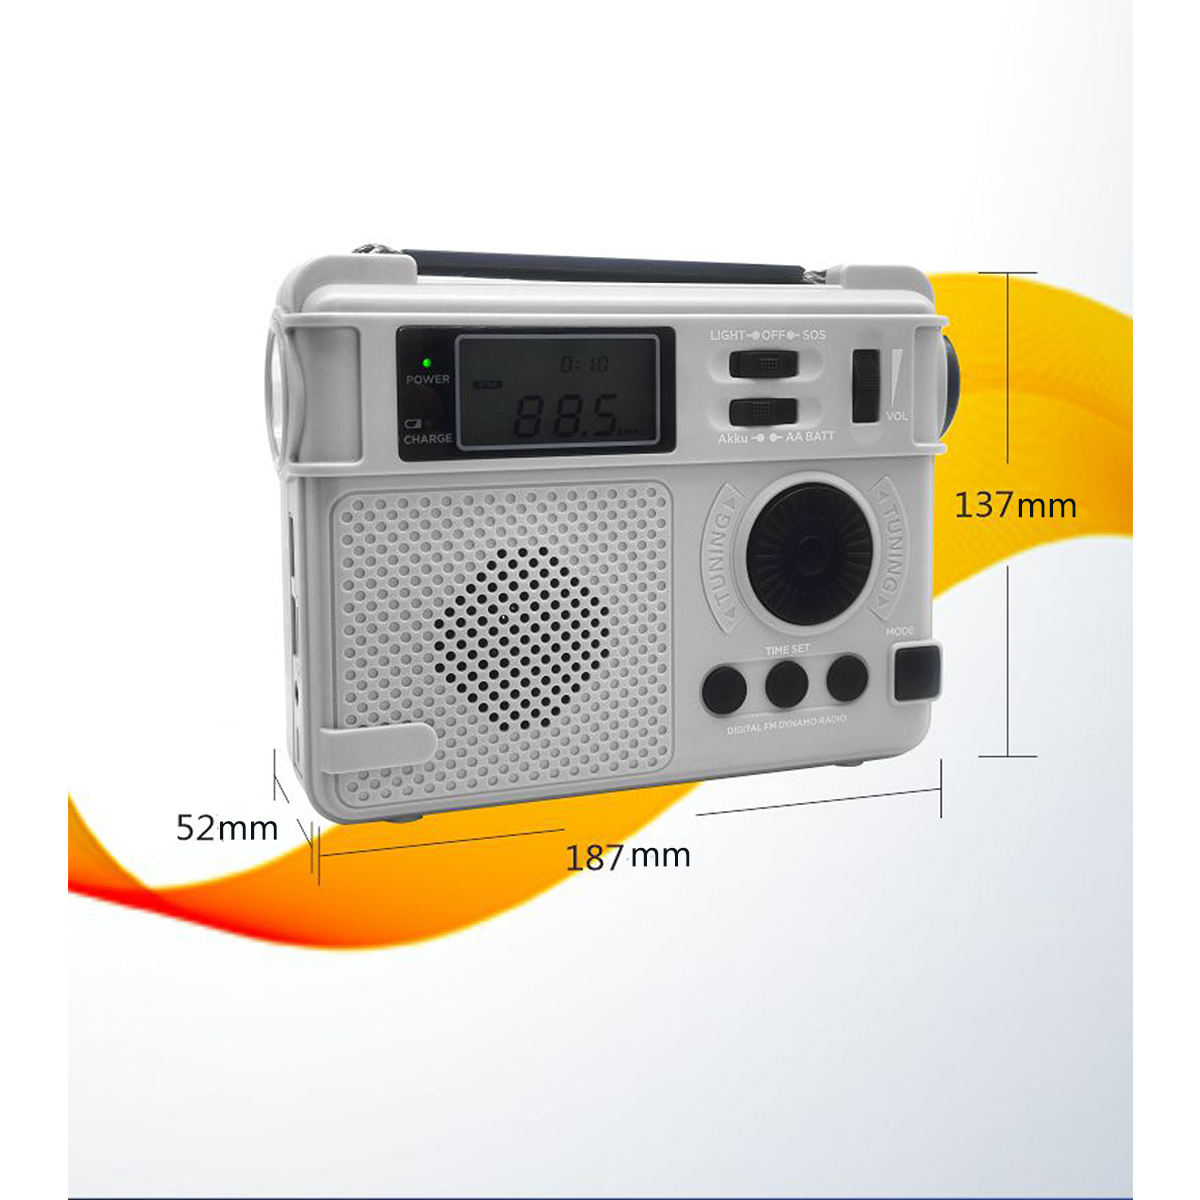 Outdoor-Notradio: Grau FM, Retro-Design, TF-Karte, Taschenlampe, MP3-Wiedergabe, Bluetooth, BRIGHTAKE SOS-Sirene Multi-Funktions-Radio,